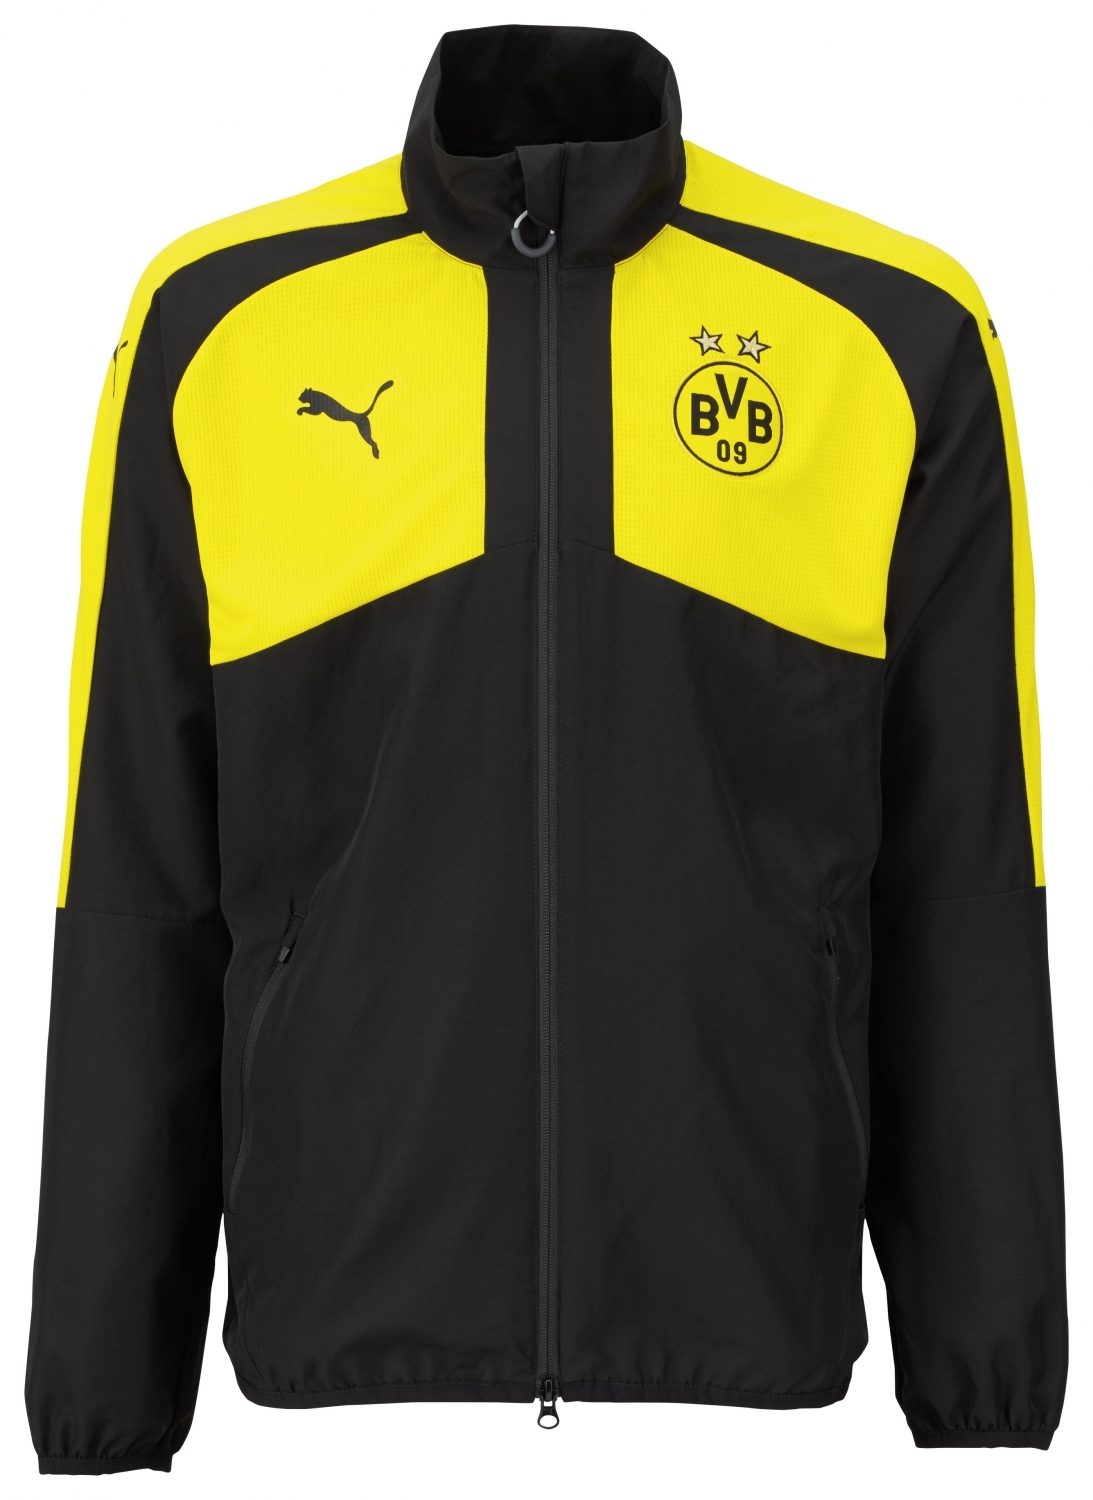 Puma Borussia Dortmund Casuals Performance Woven Jacket Jacke schwarz gelb